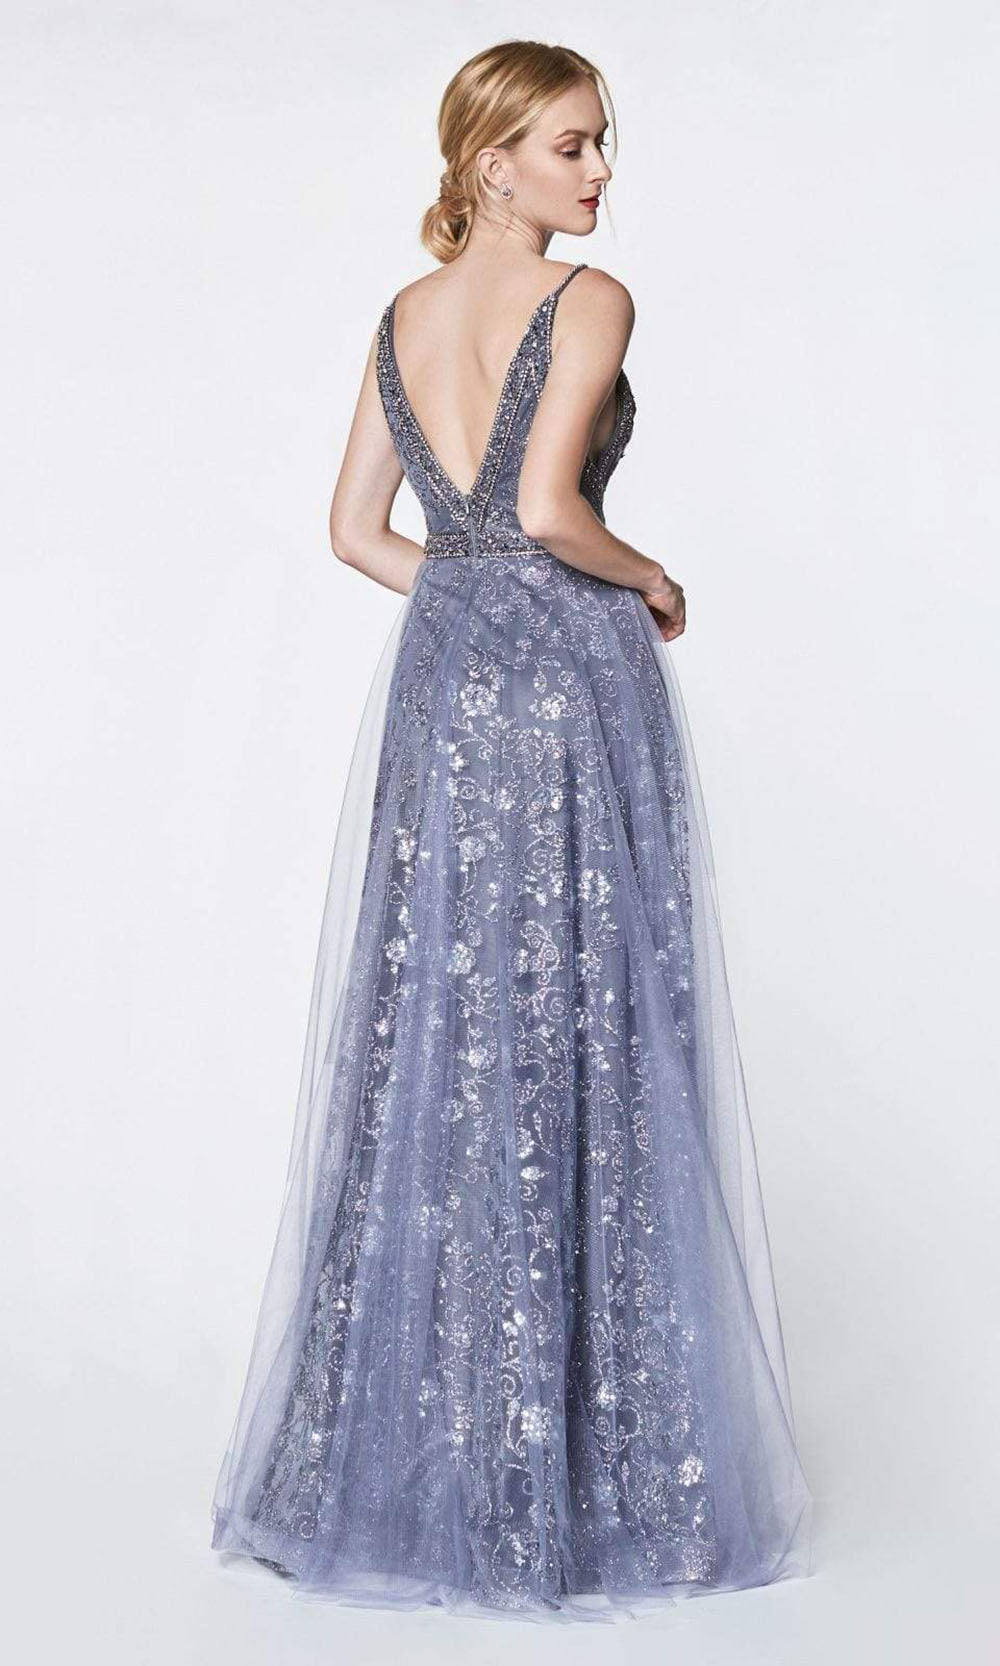 Cinderella Divine - Embroidered Plunging Neck Glitter Gown KC888 CCSALE 12 / Midnight